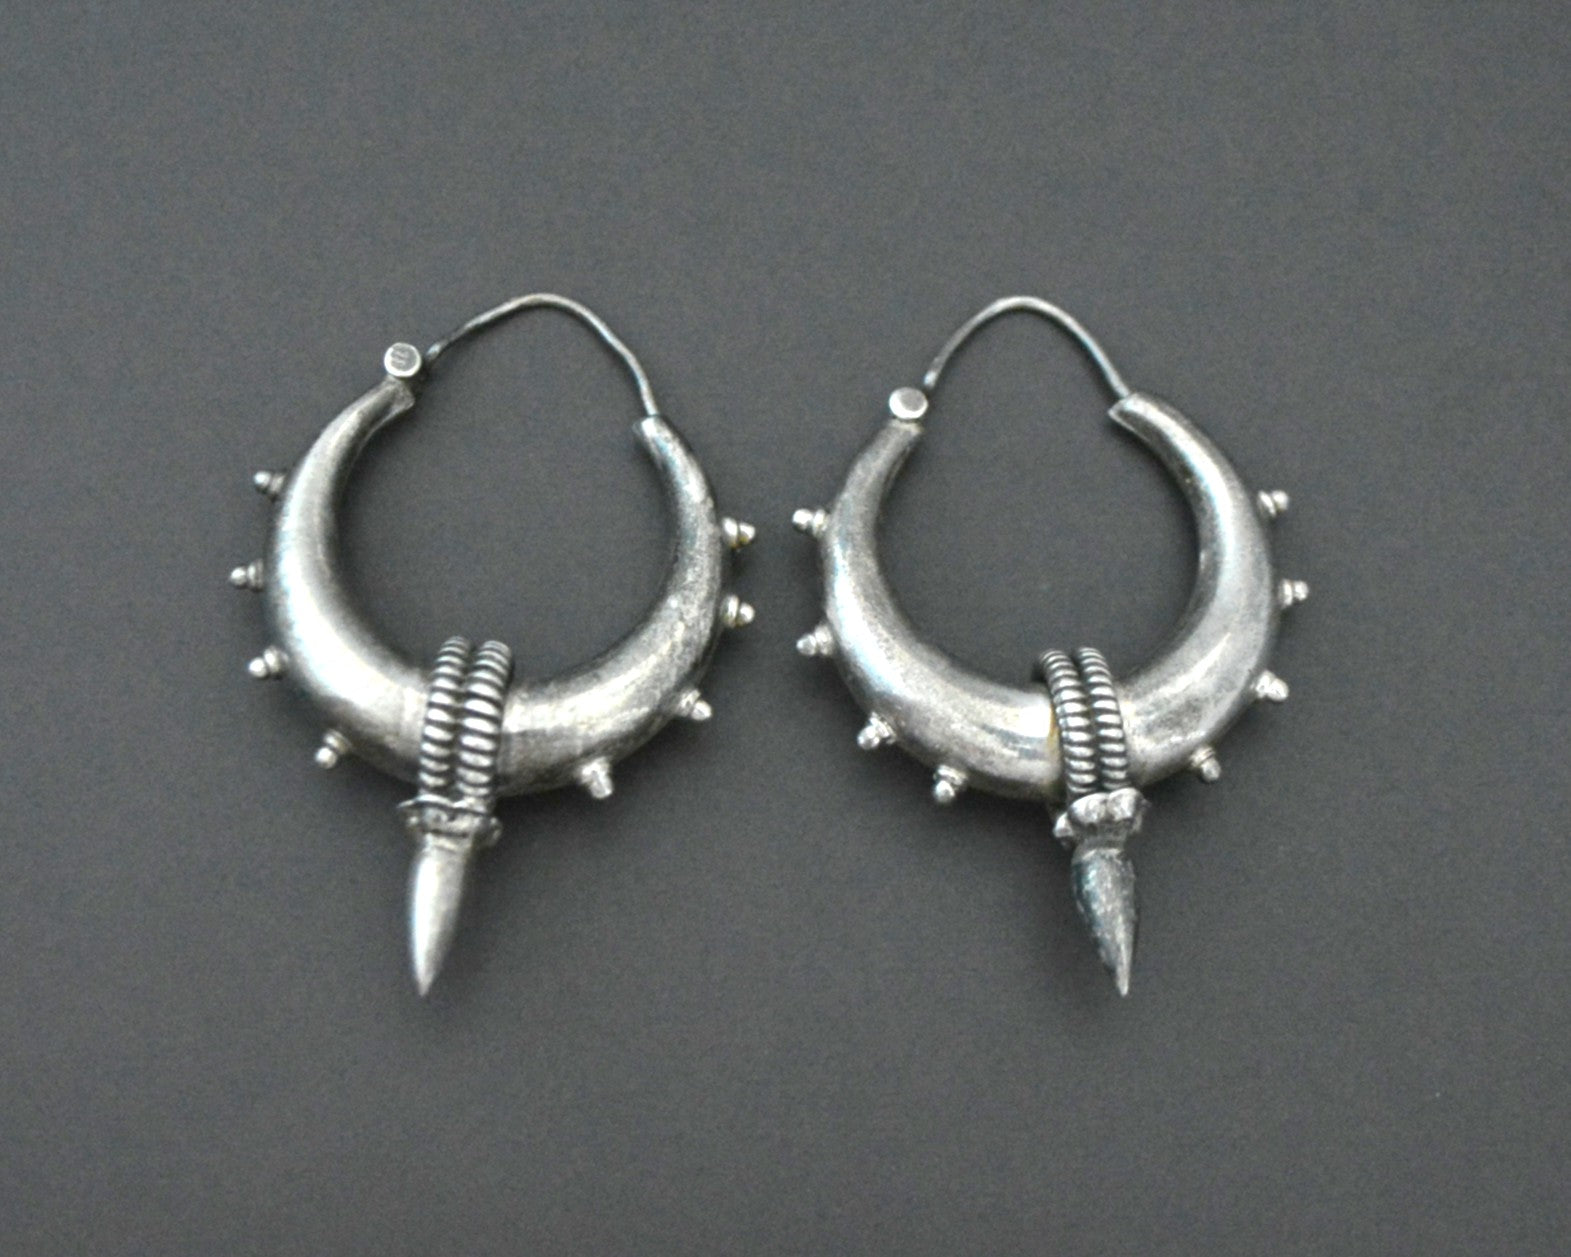 Ethnic Spike Hoop Earrings - SMALL TO LARGE